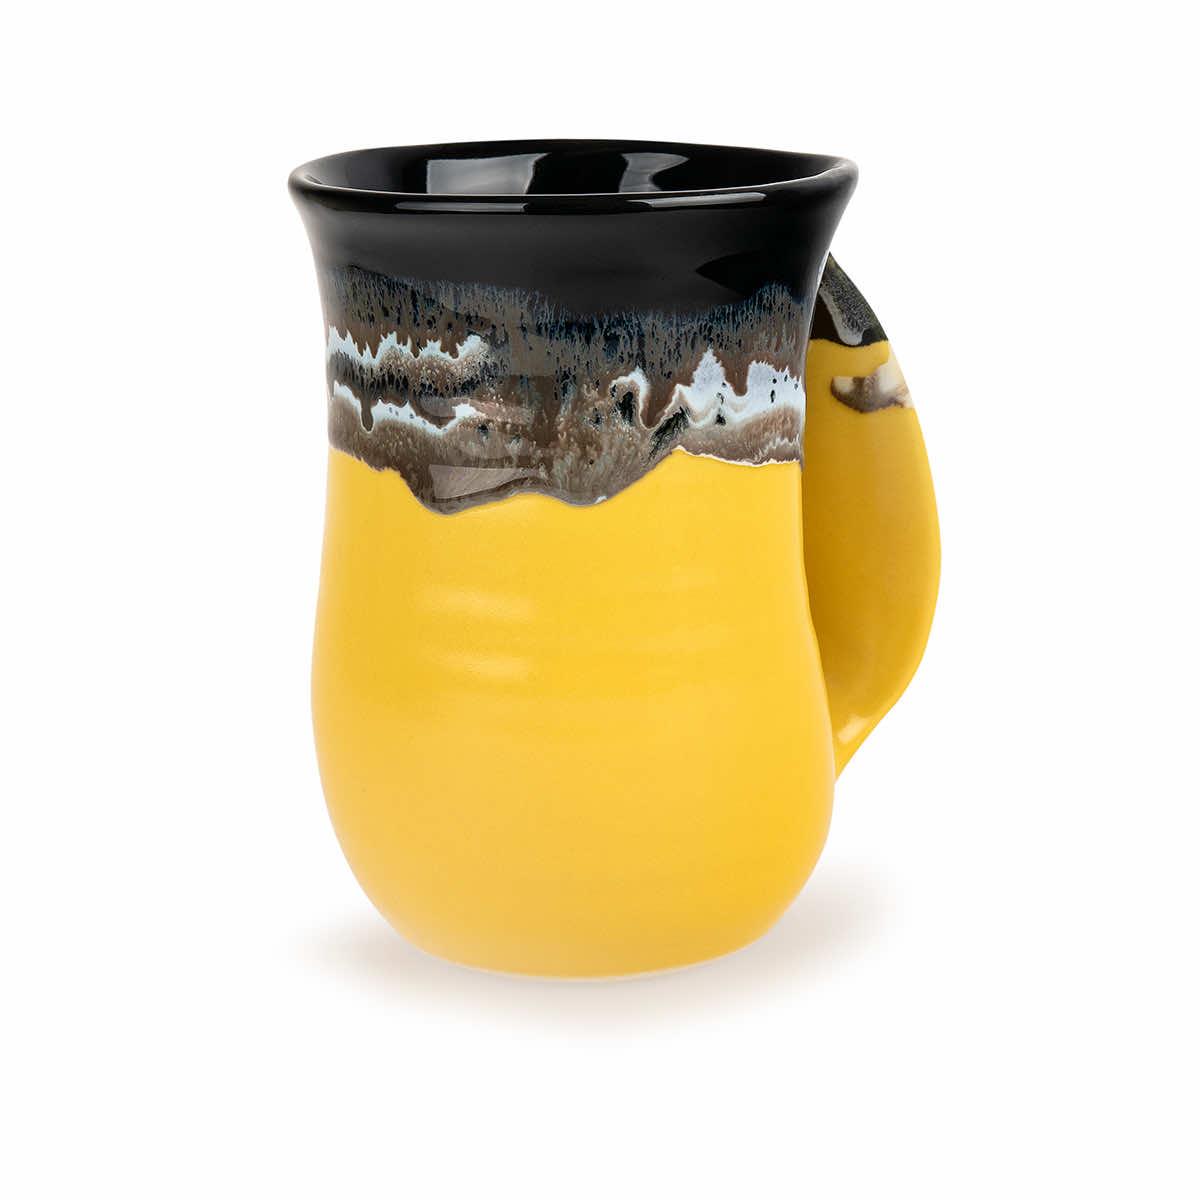  Yellow & Black Handwarmer Mug